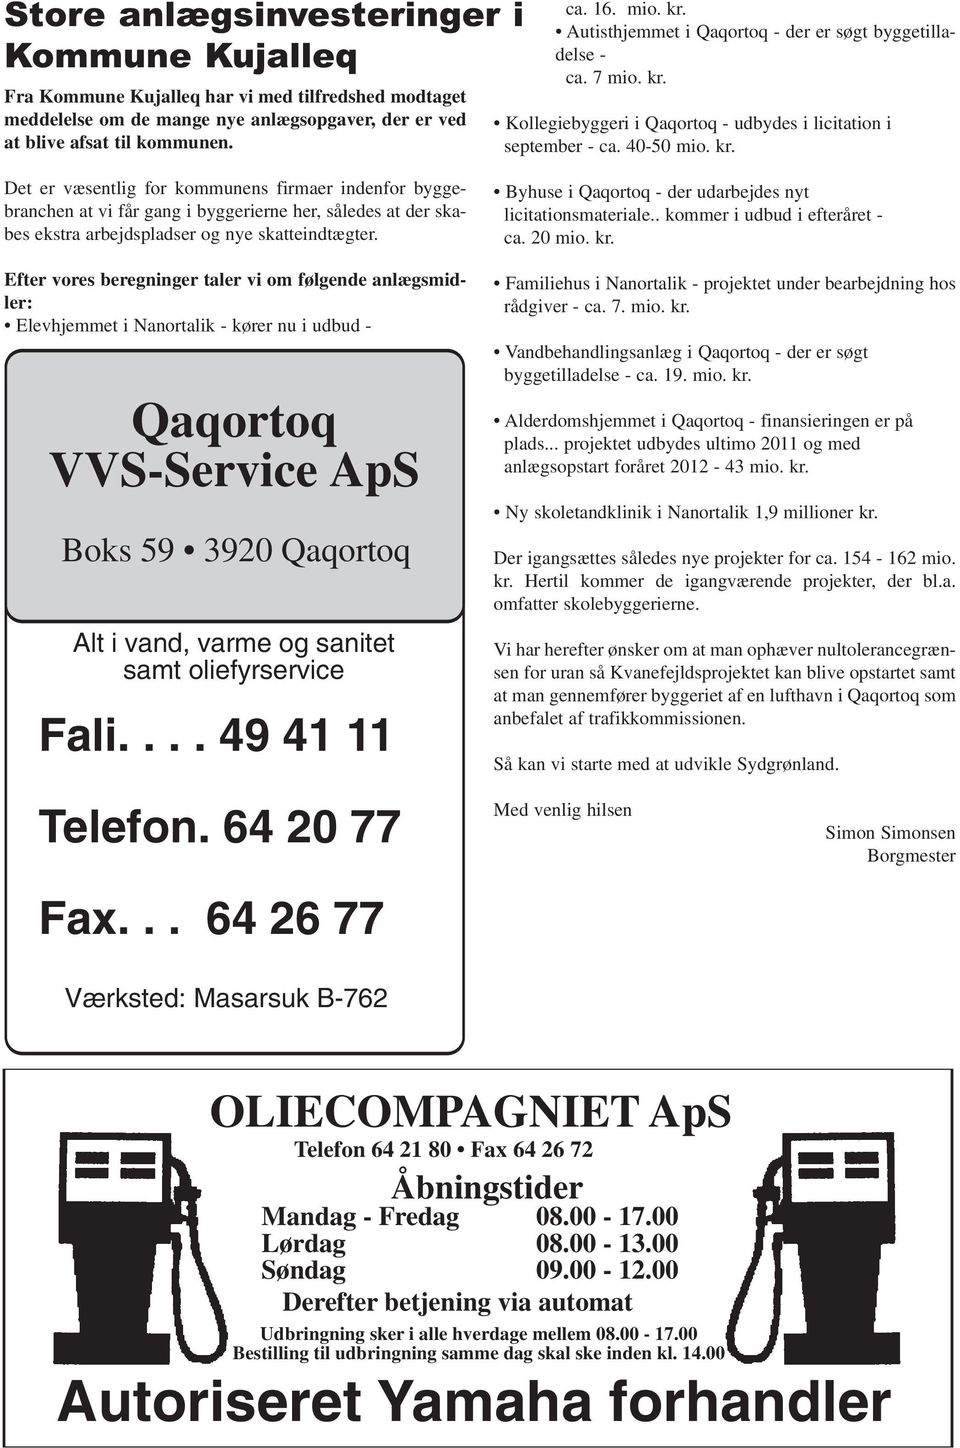 Kollegiebyggeri i Qaqortoq - udbydes i licitation i september - ca. 40-50 mio. kr.